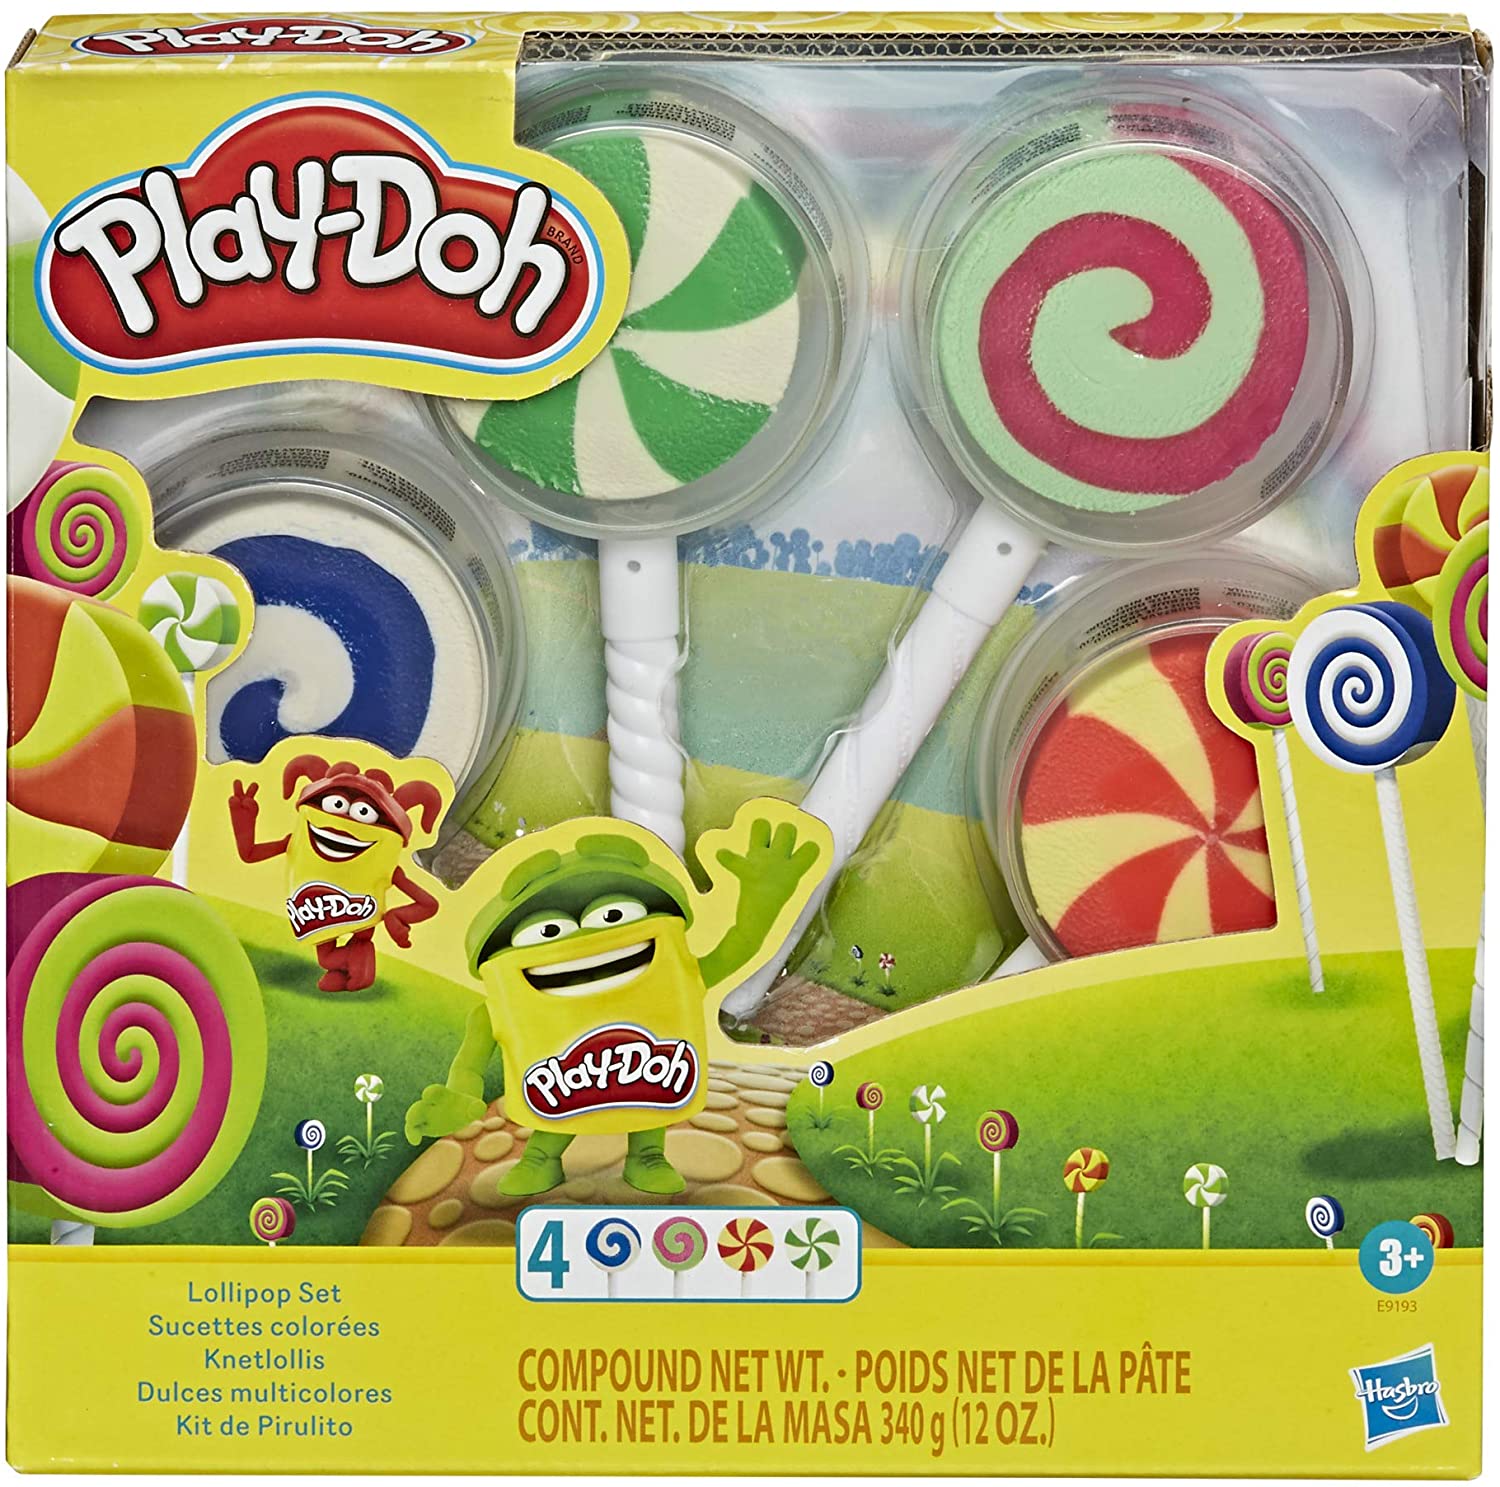 Play-Doh Toolin' Around Toy Tools Set